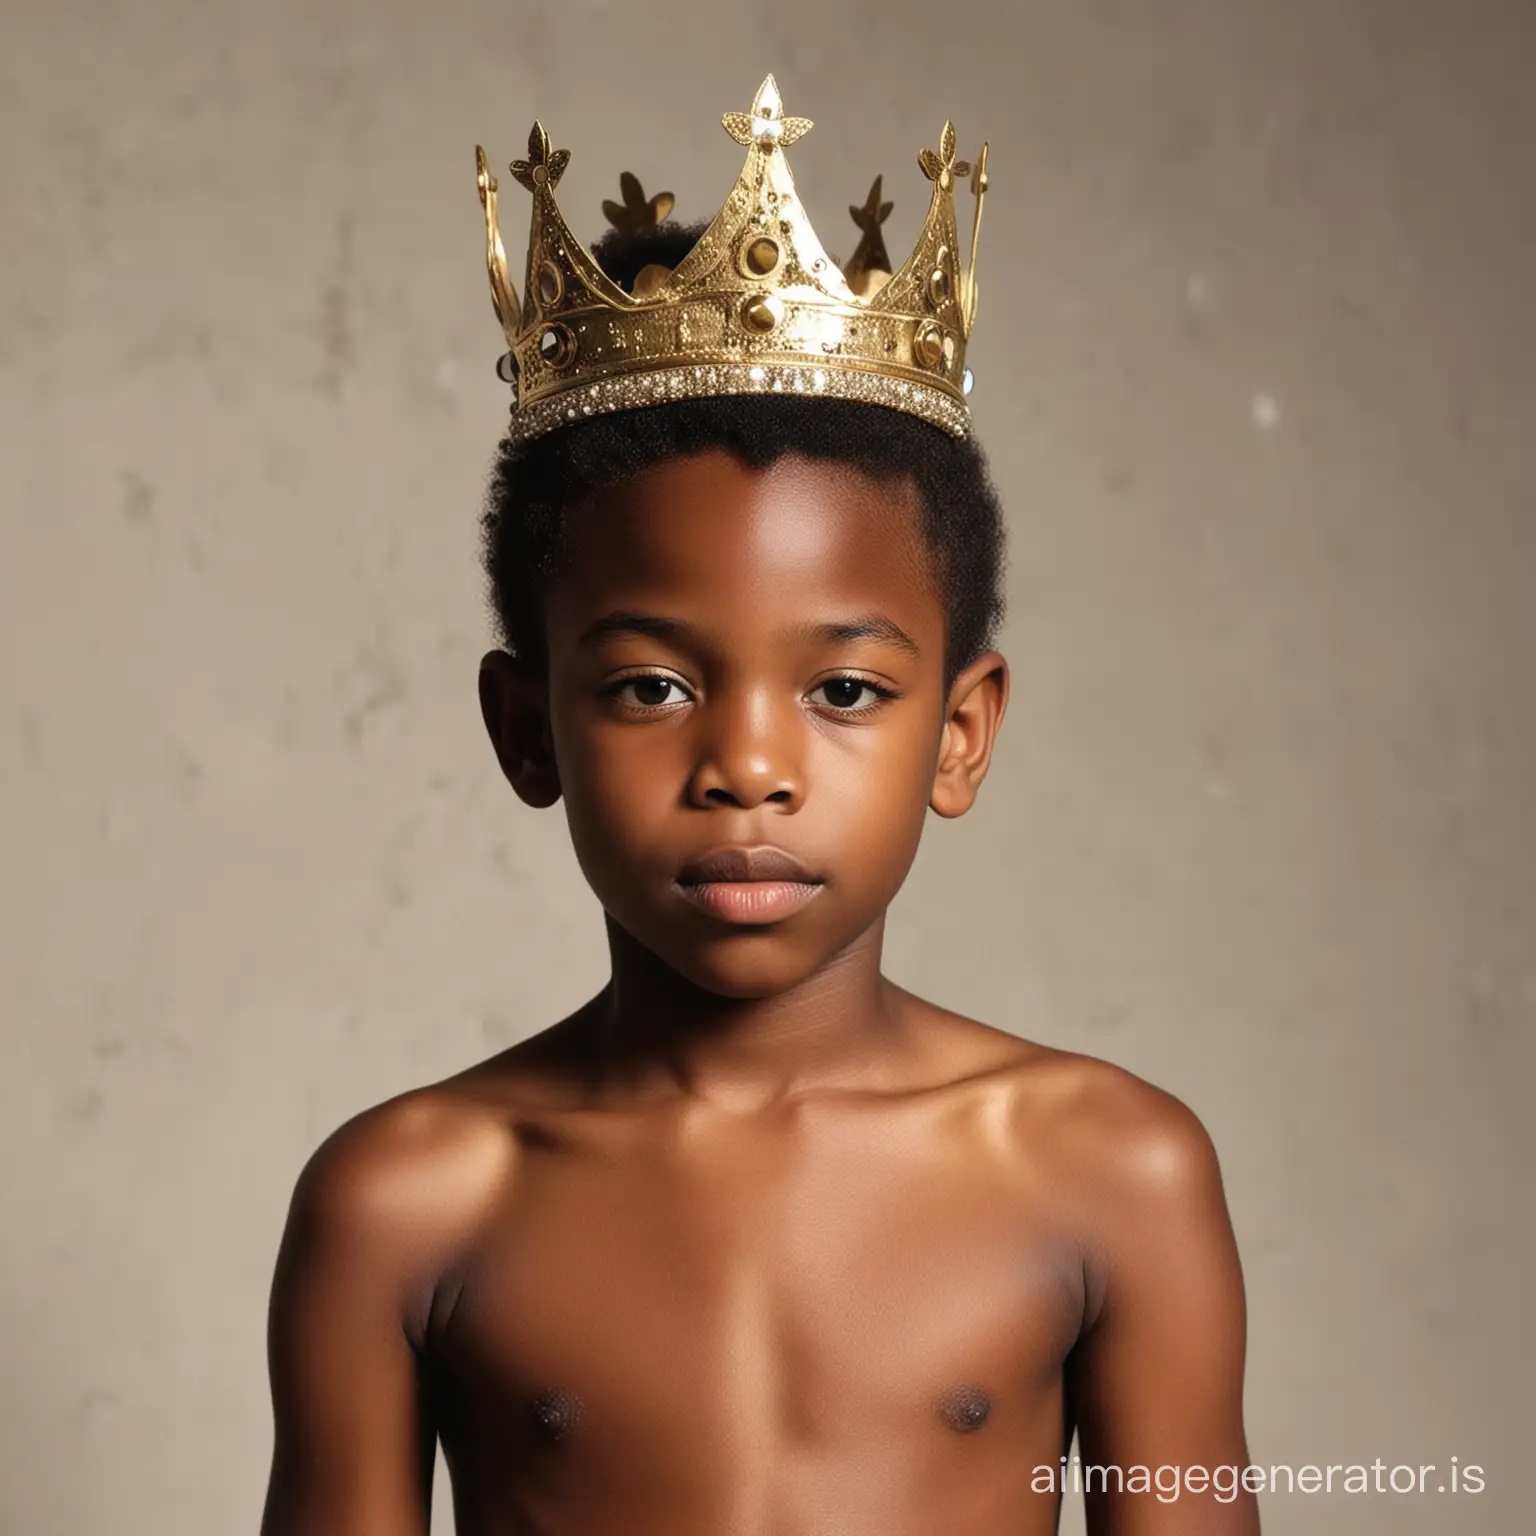 shirtless black boy with crown